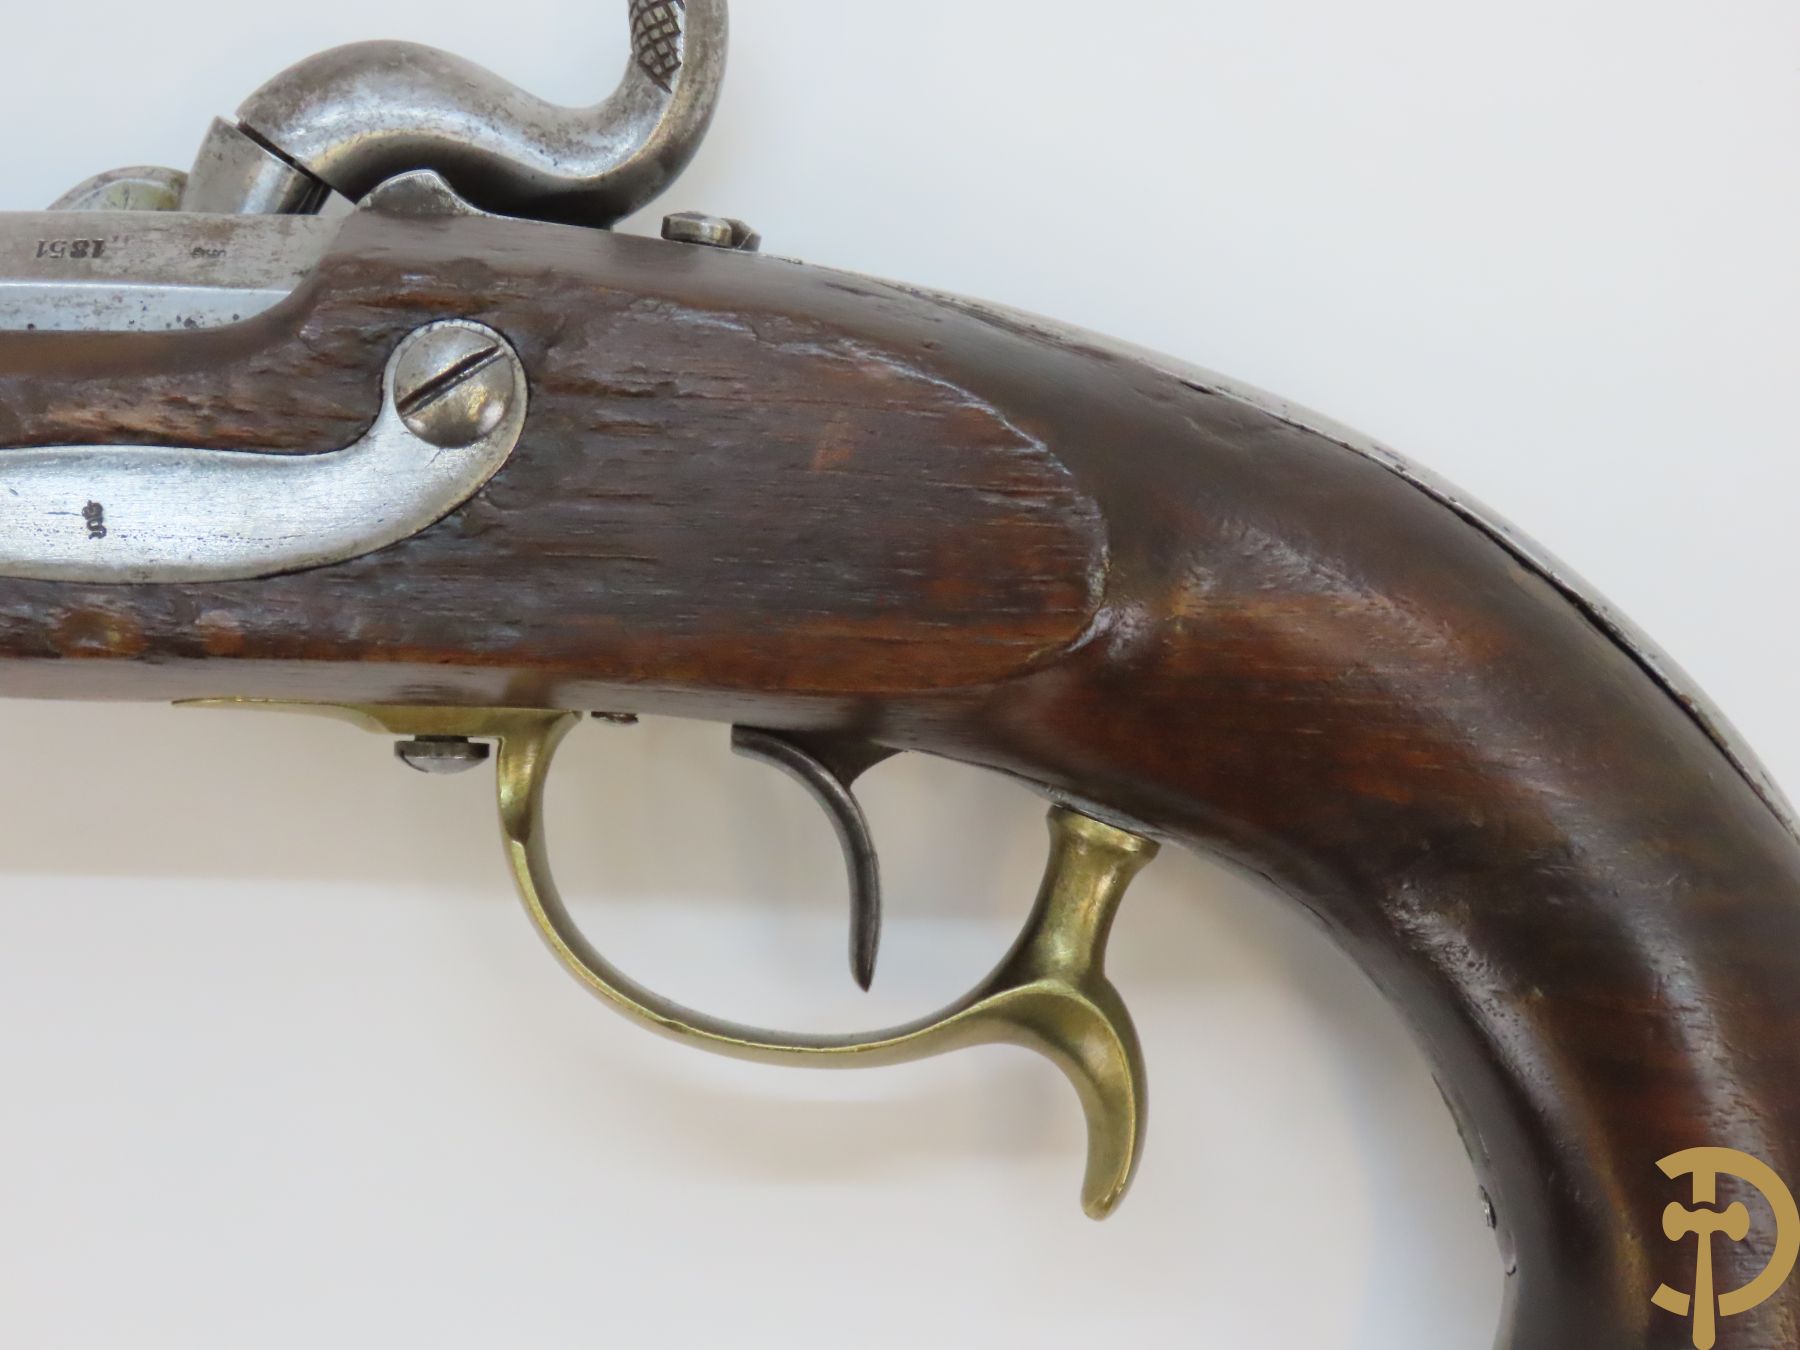 Duits militair cavallerie percussie pistool, getekend Suhl 1851